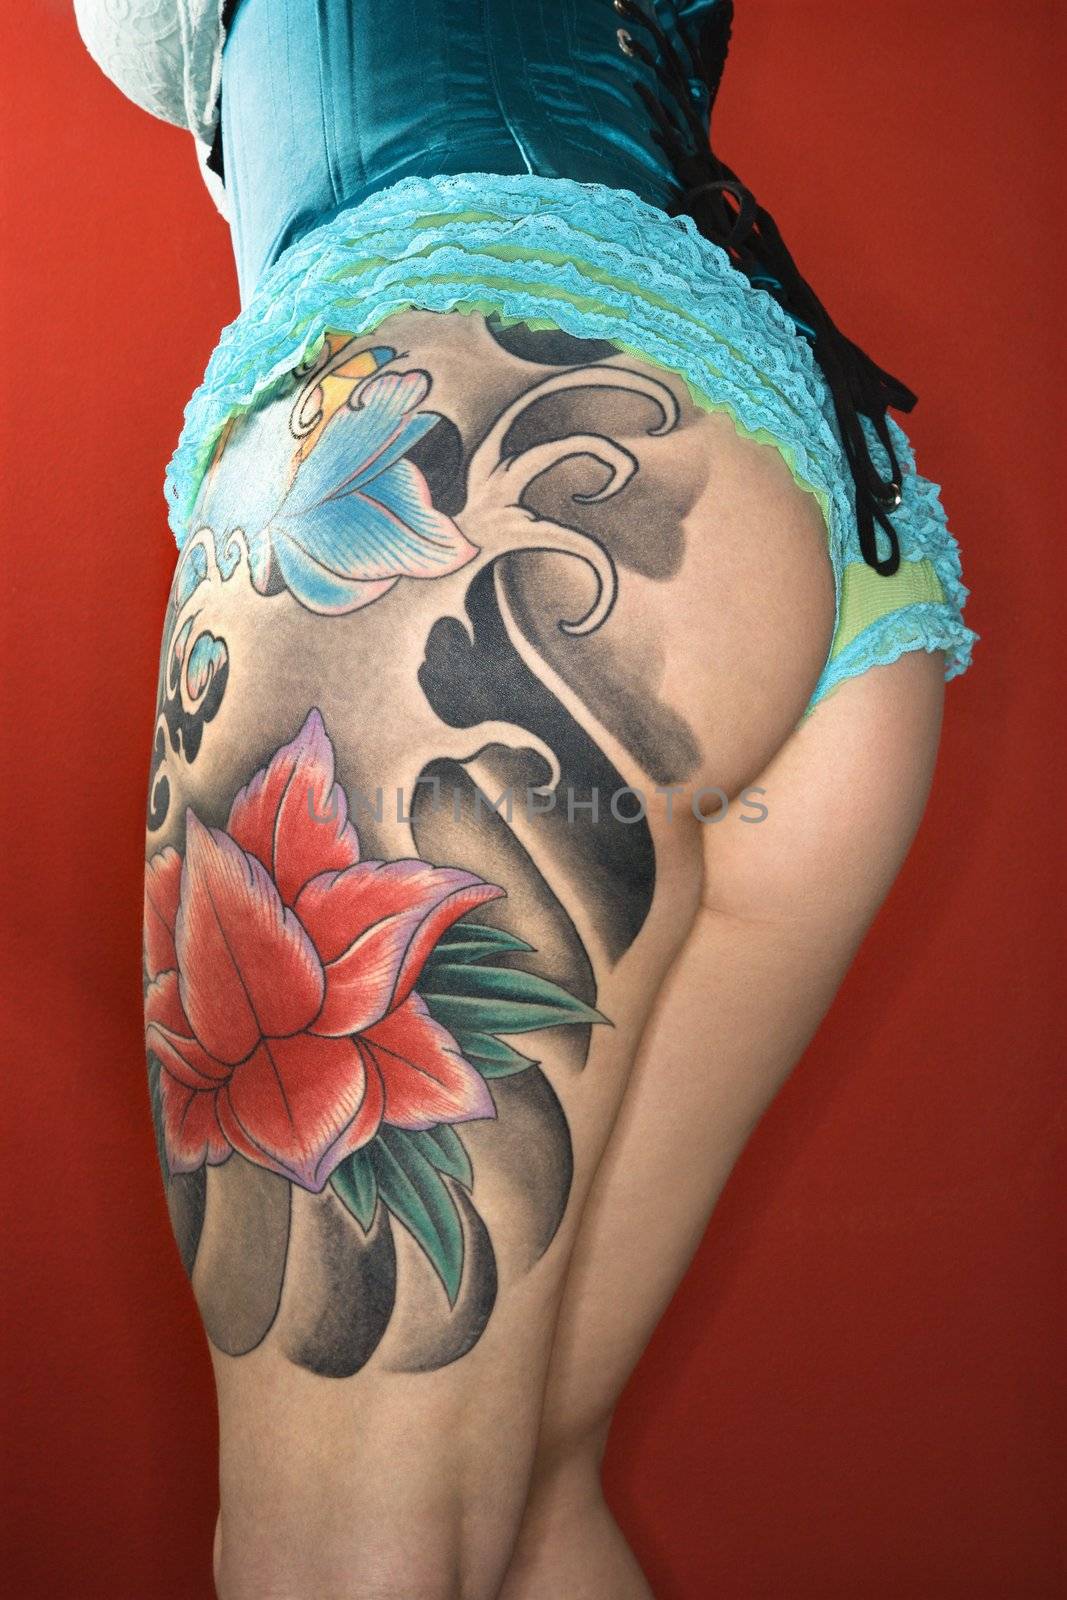 Close-up of womans tattooed leg.